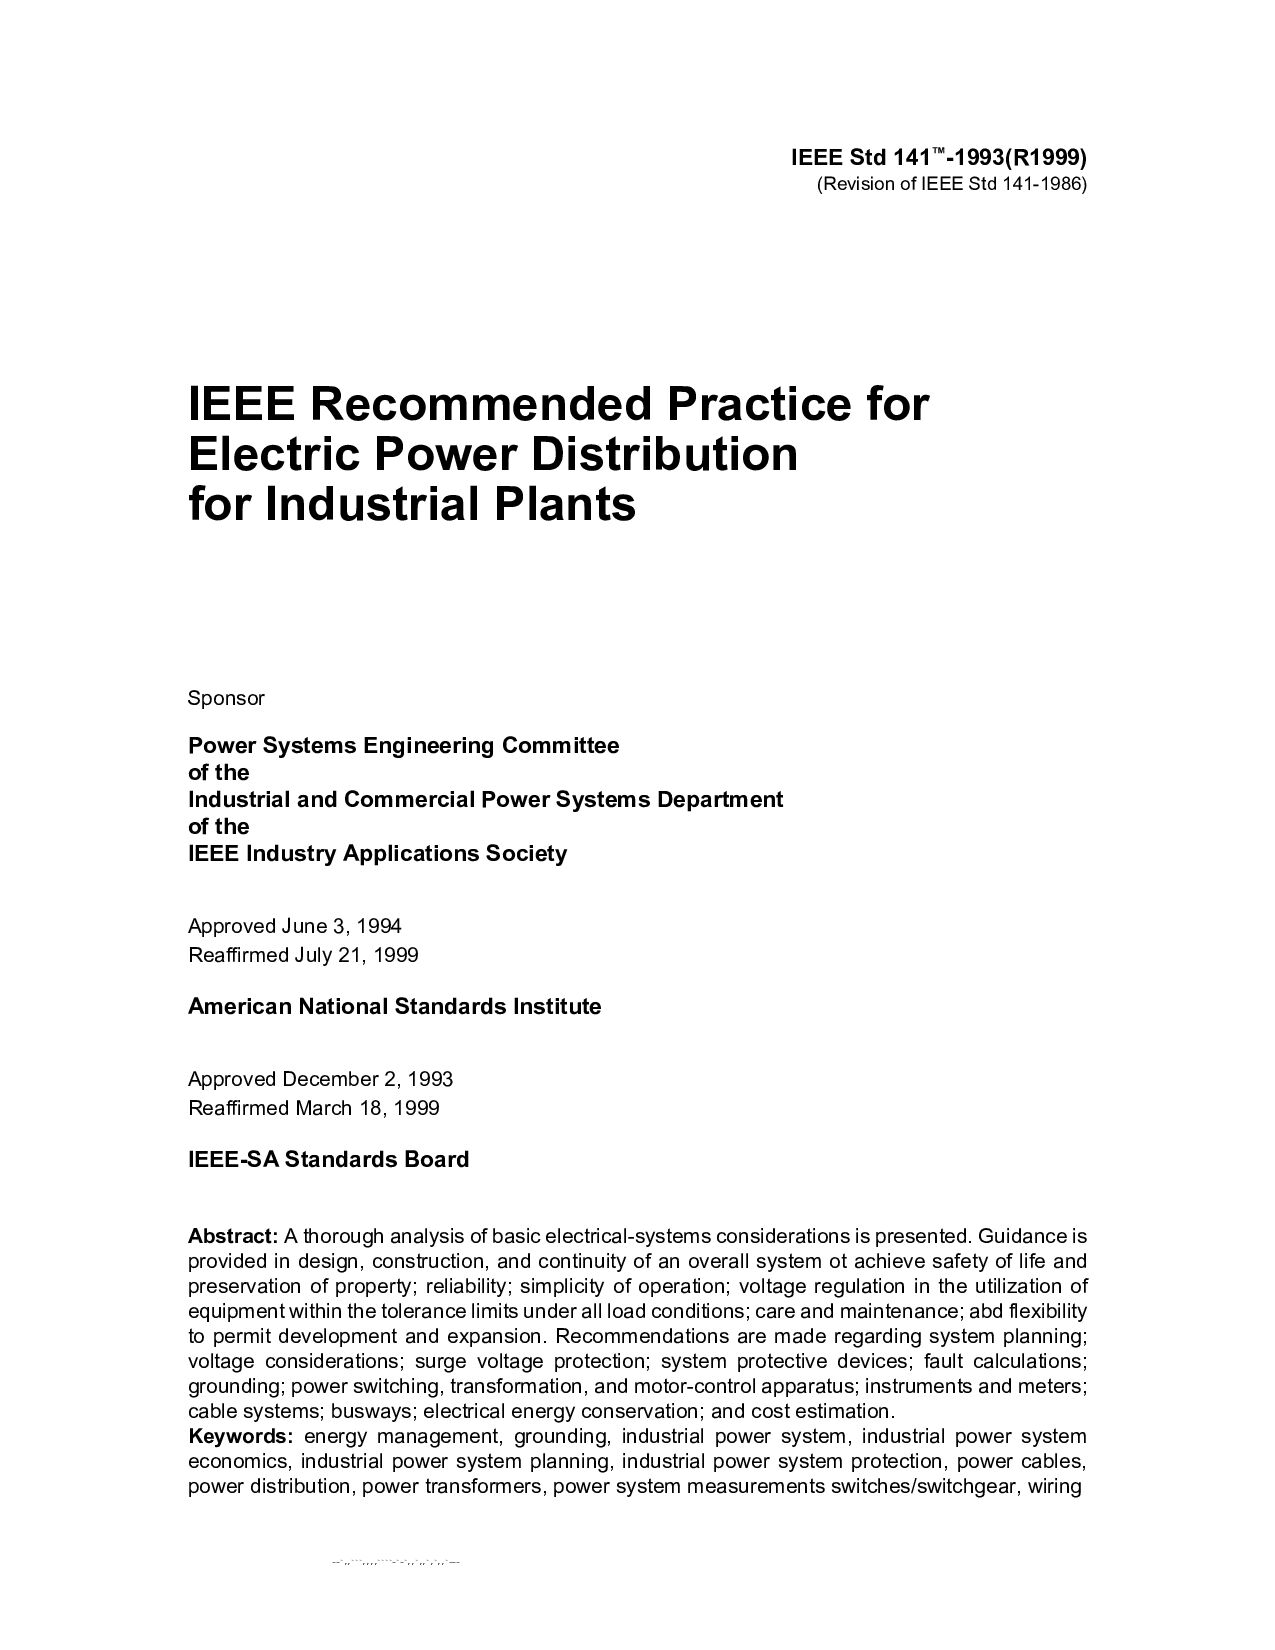 IEEE 141-1993(R1999)封面图